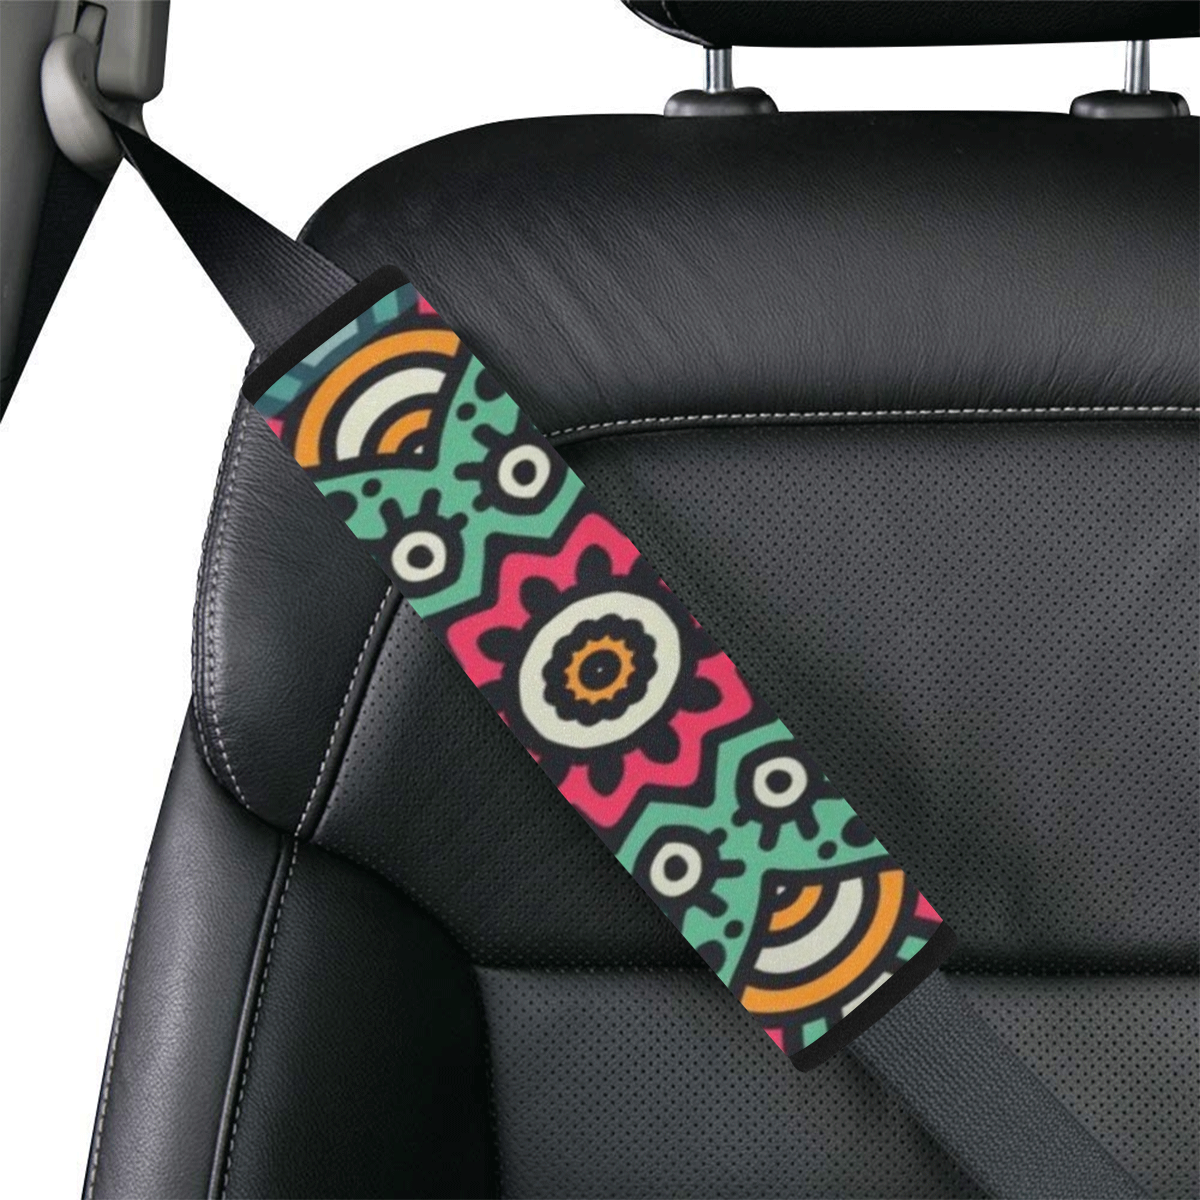 LIFE OF GOD MANDALAS Car Seat Belt Cover 7''x12.6''